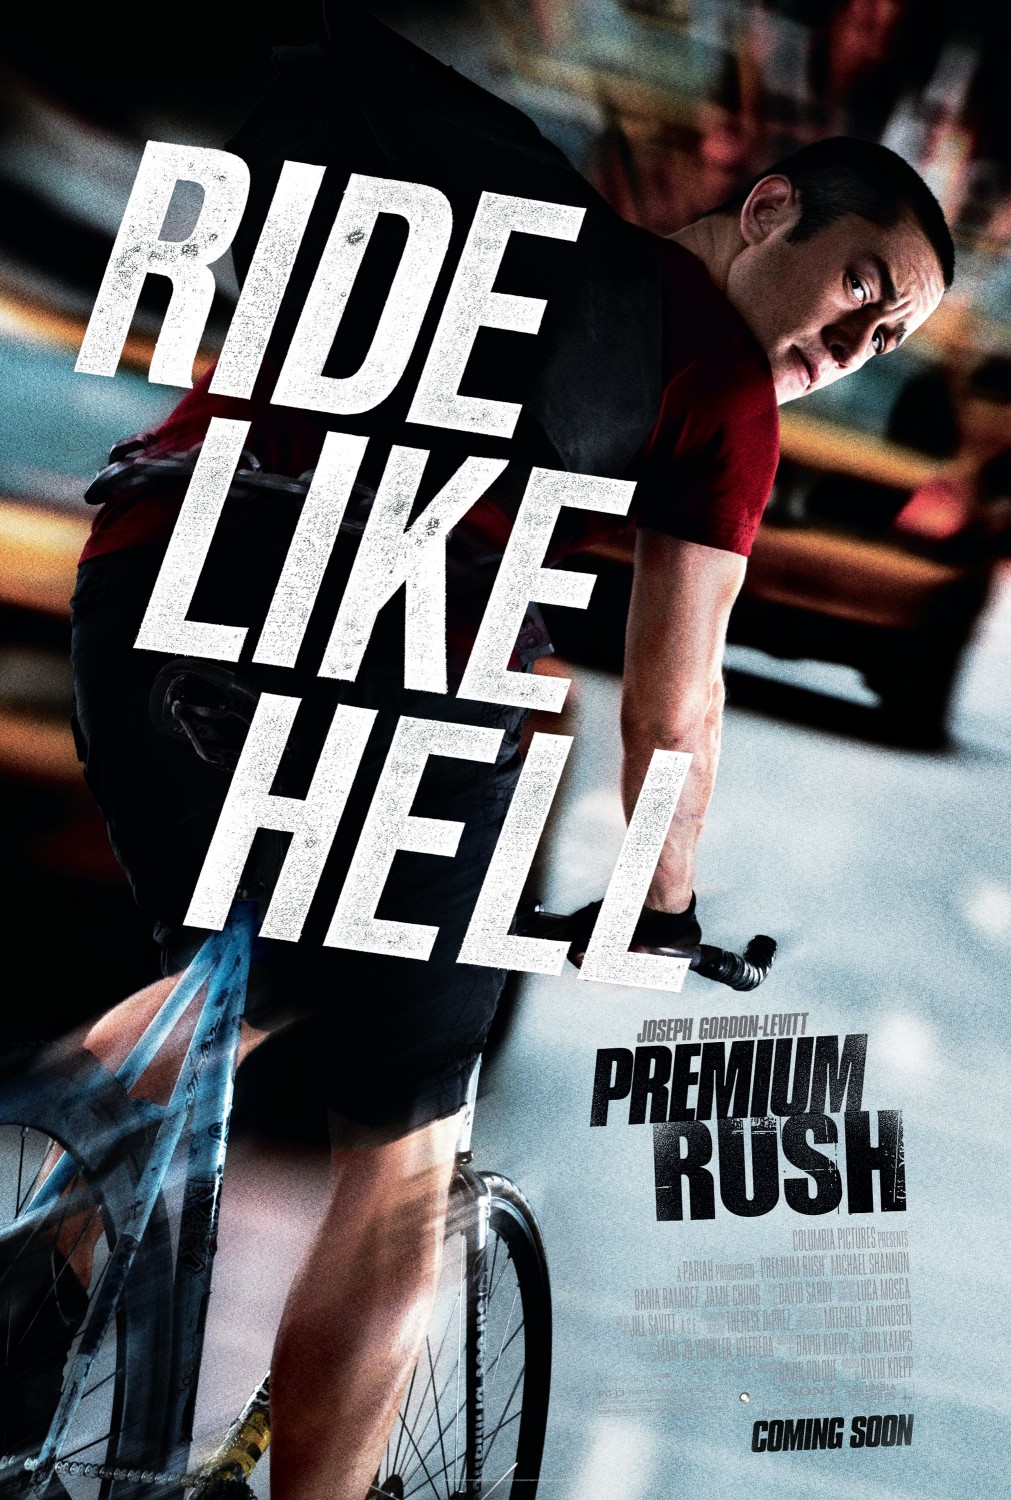 Extra Large Movie Poster Image for Premium Rush 